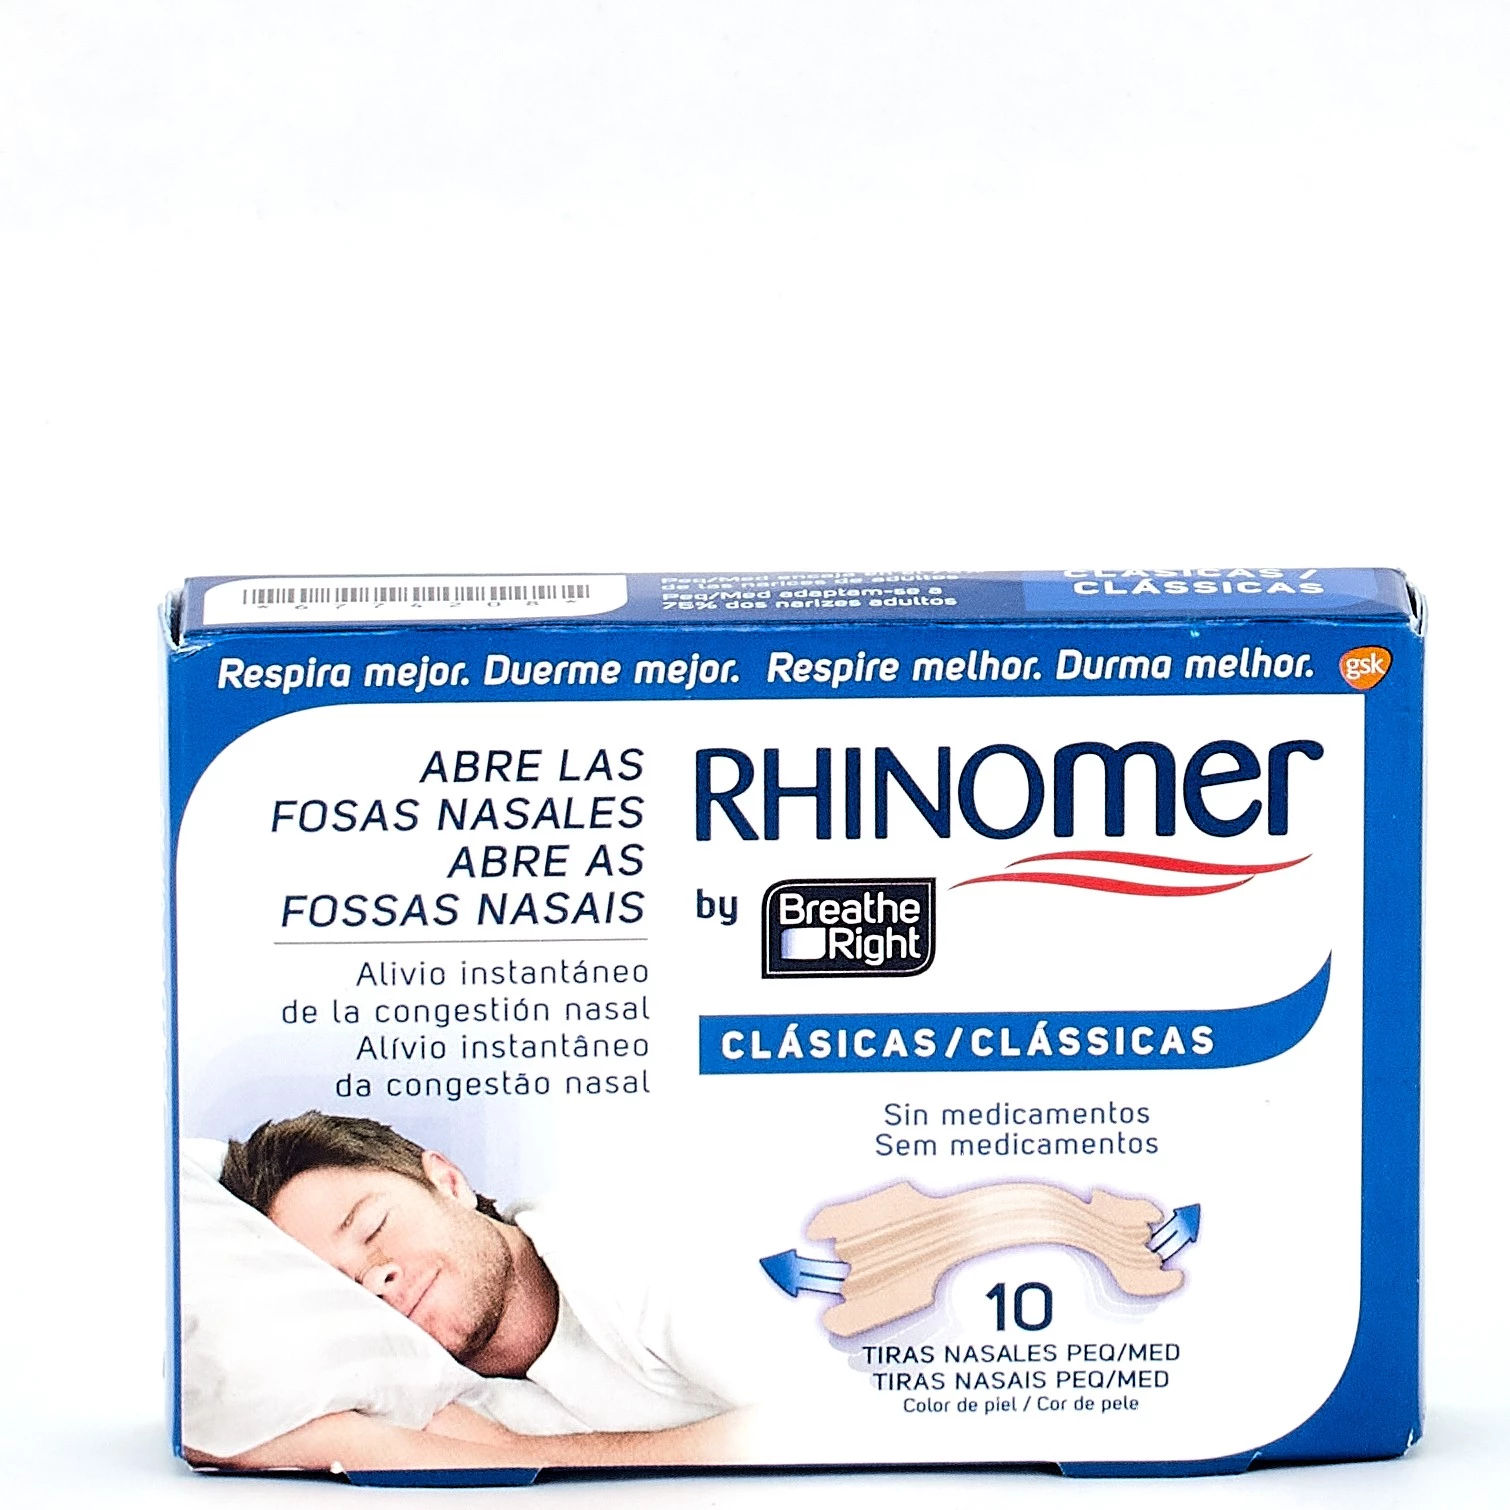 https://www.farmaciabarata.es/19408/rhinomer-tira-nasal-breathe-right-peqmed-10-uds.jpg